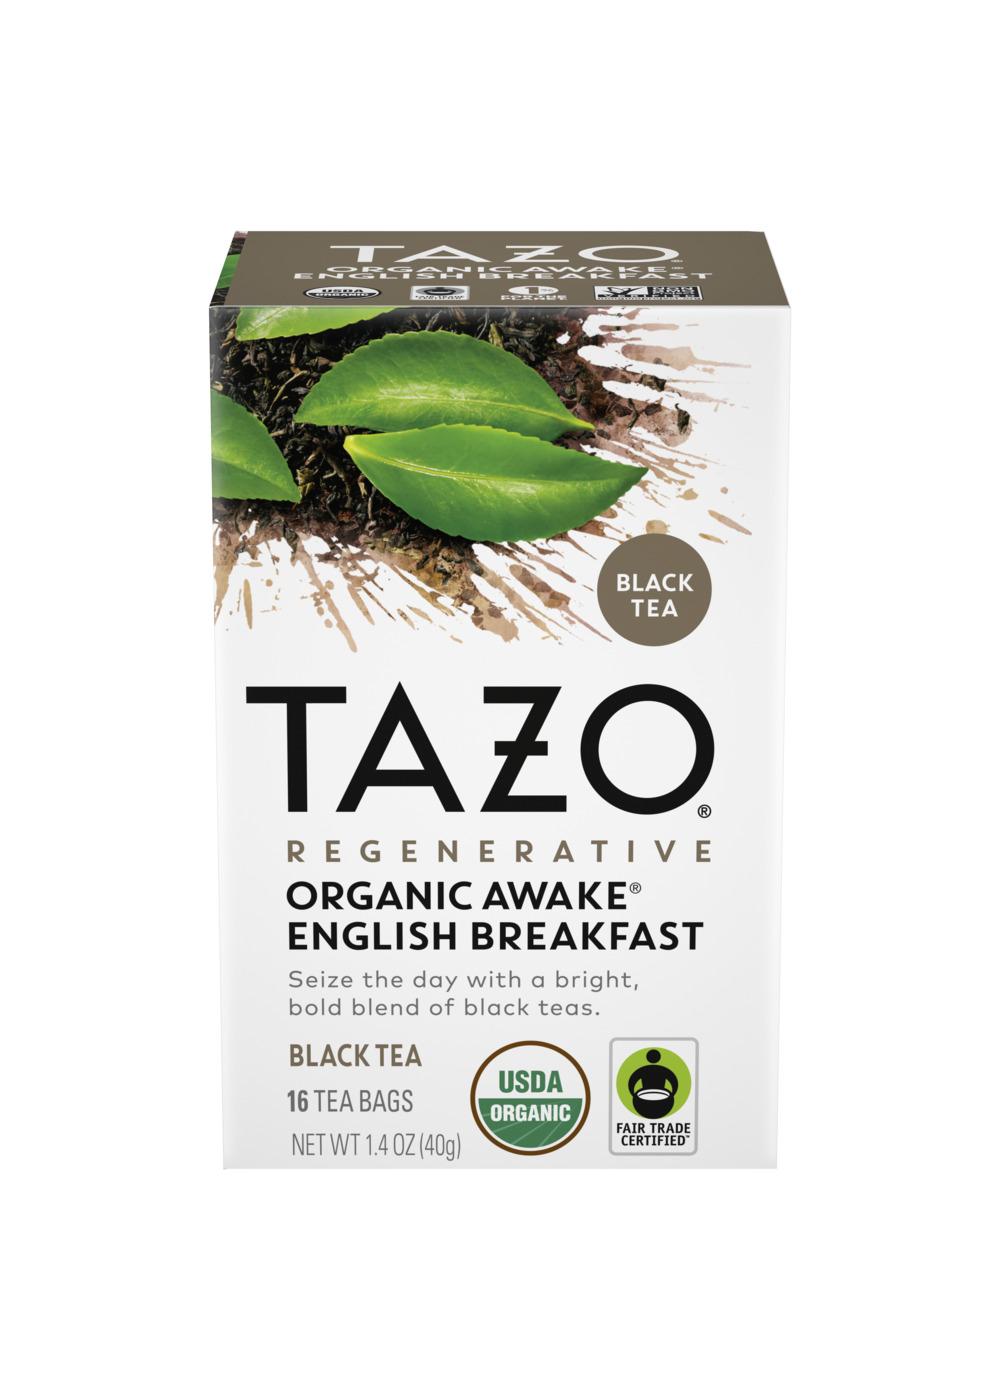 Tazo Regenerative Organic Awake English Breakfast Black Tea Bags; image 4 of 4